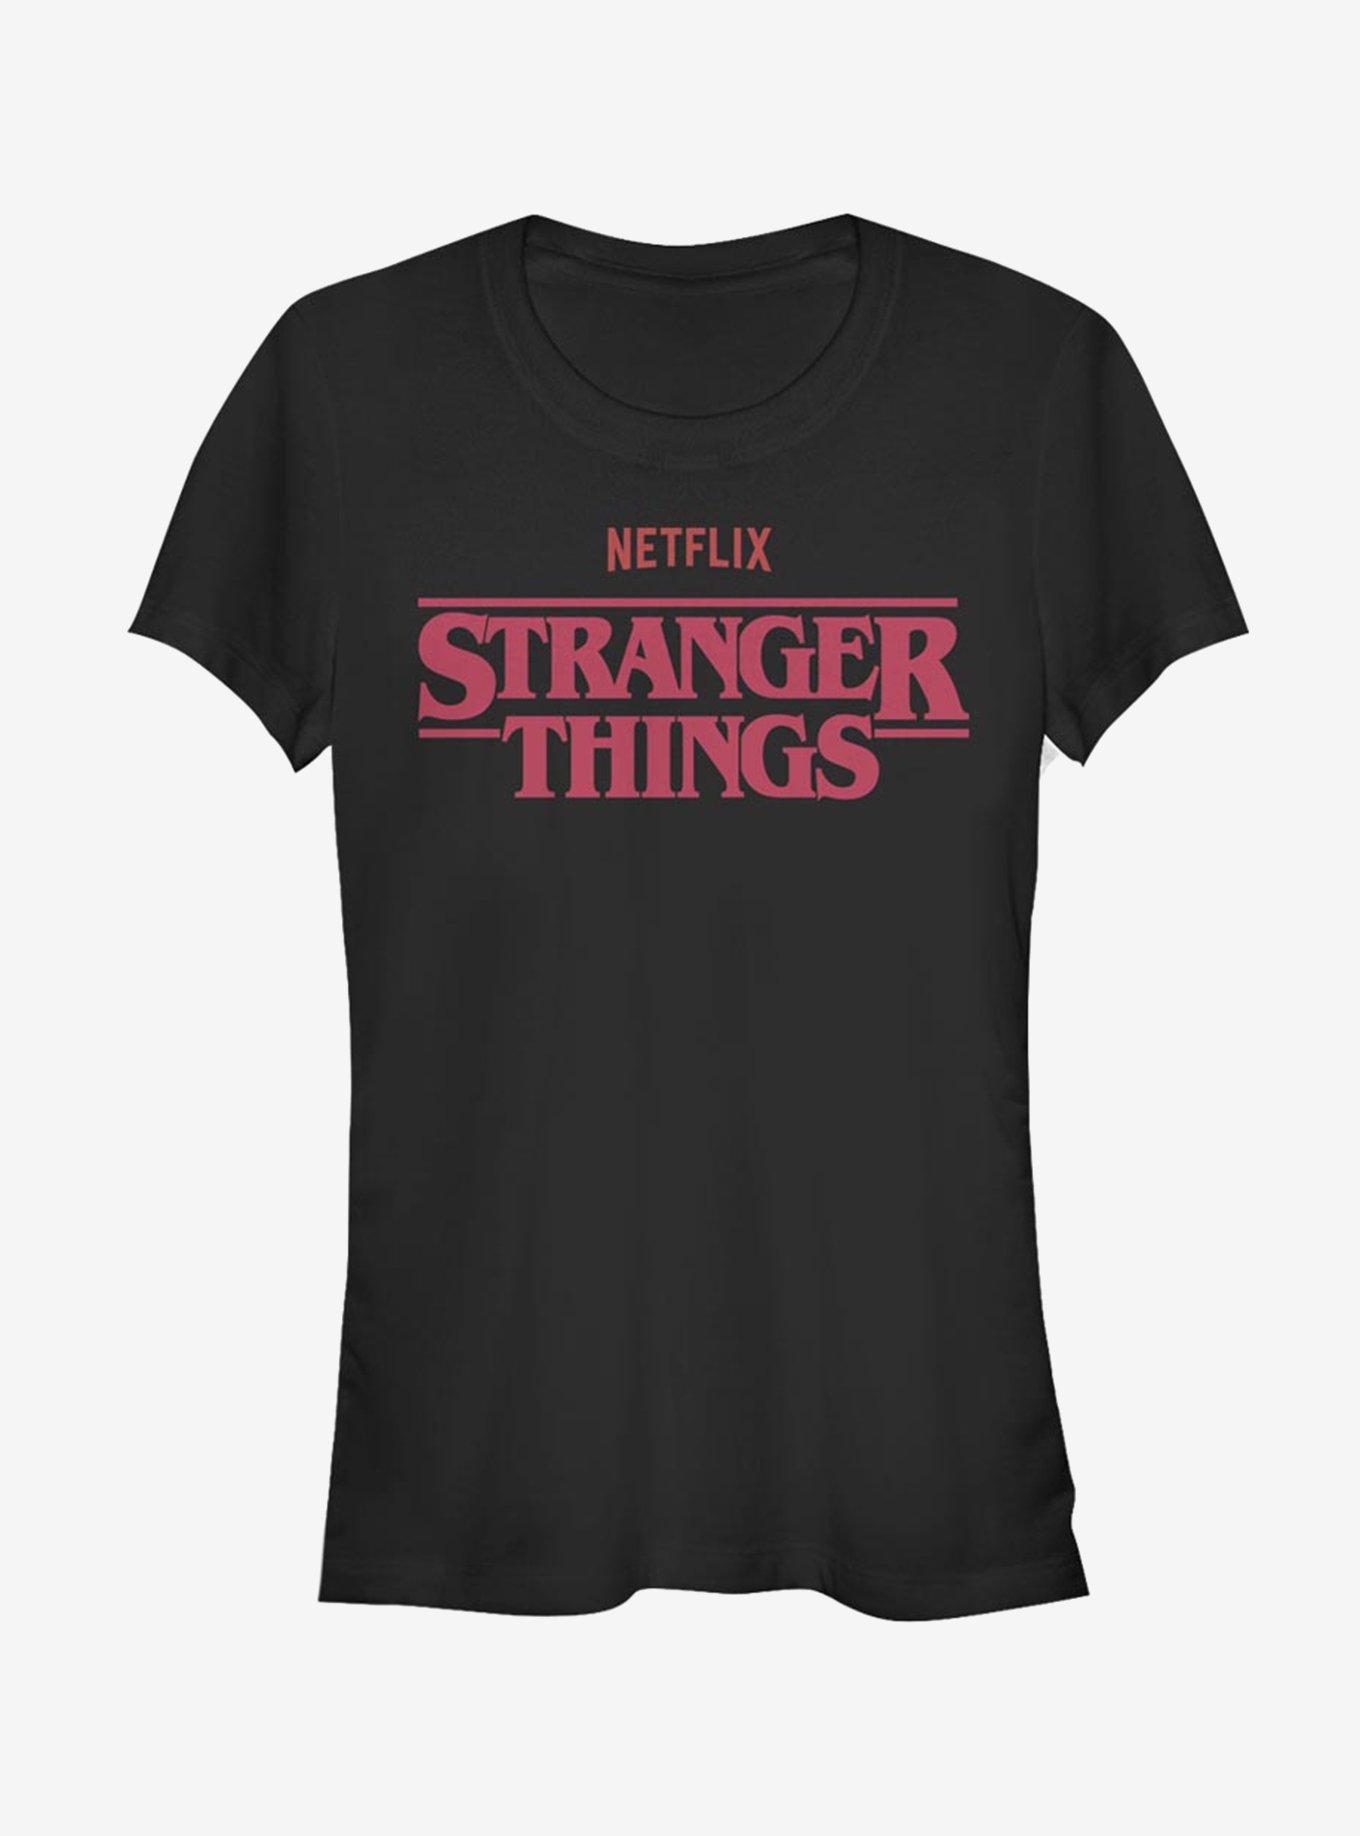 Stranger Things Netflix Logo Girls T-Shirt